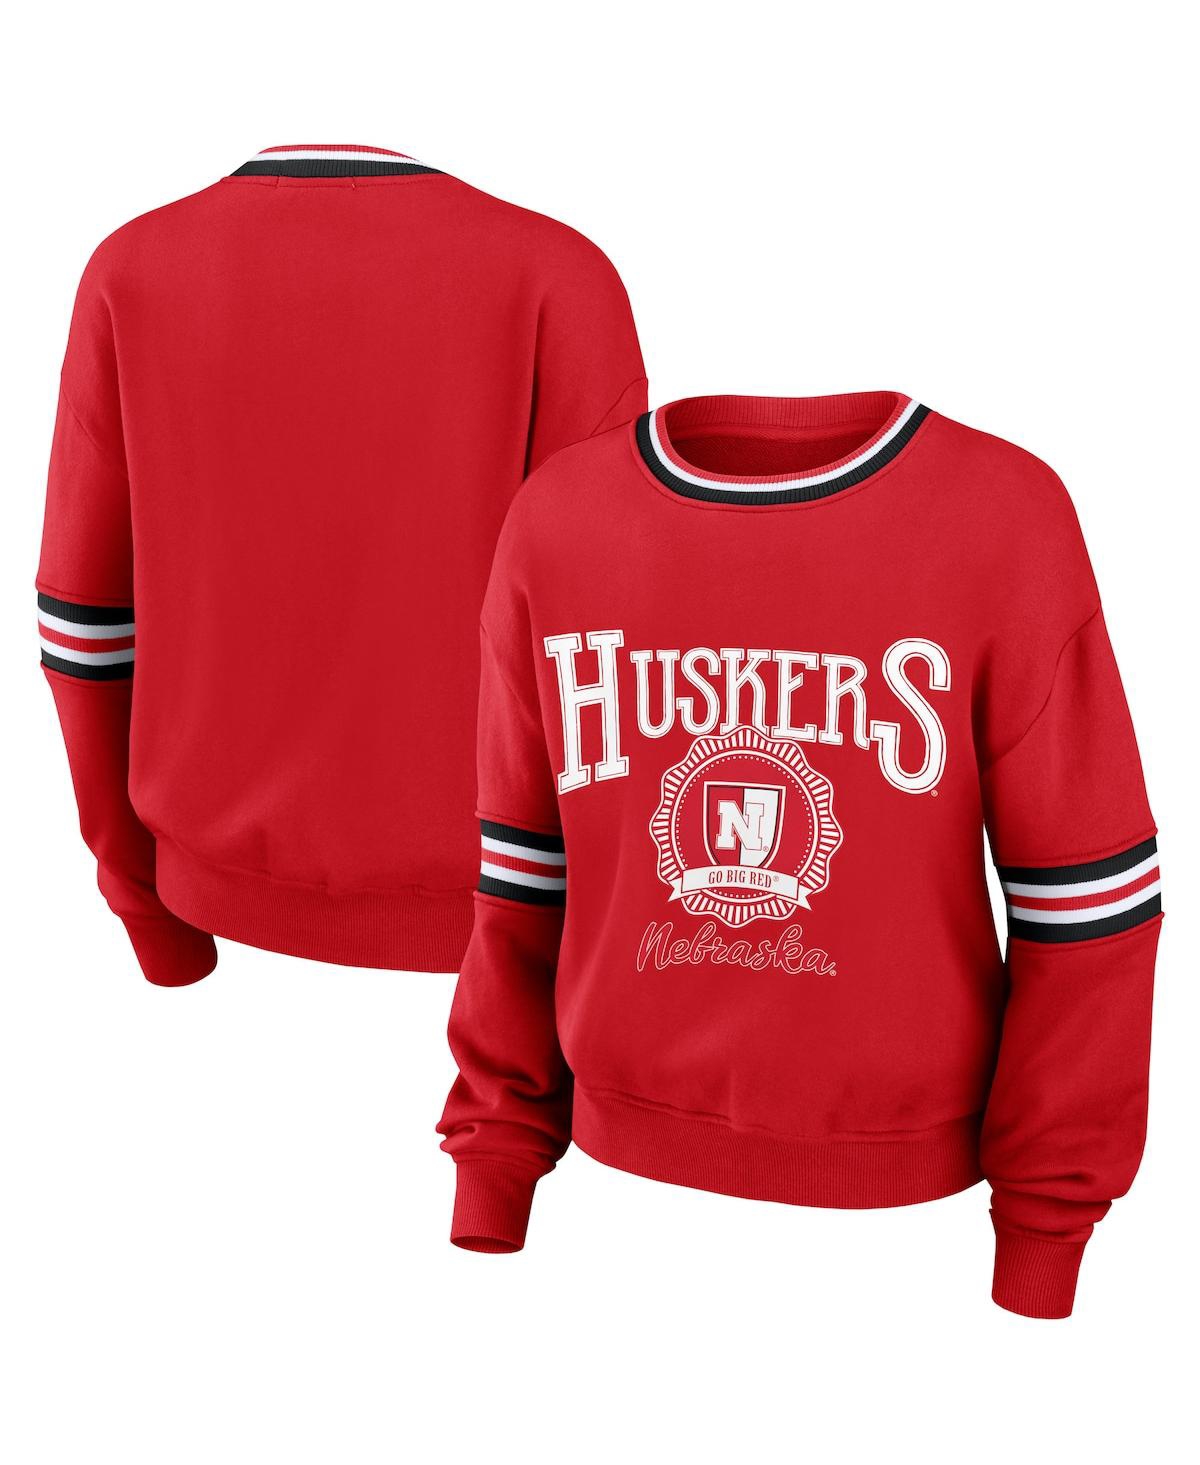 Wear By Erin Andrews Women's  Red Distressed Nebraska Huskers Vintage-like Pullover Sweatshirt